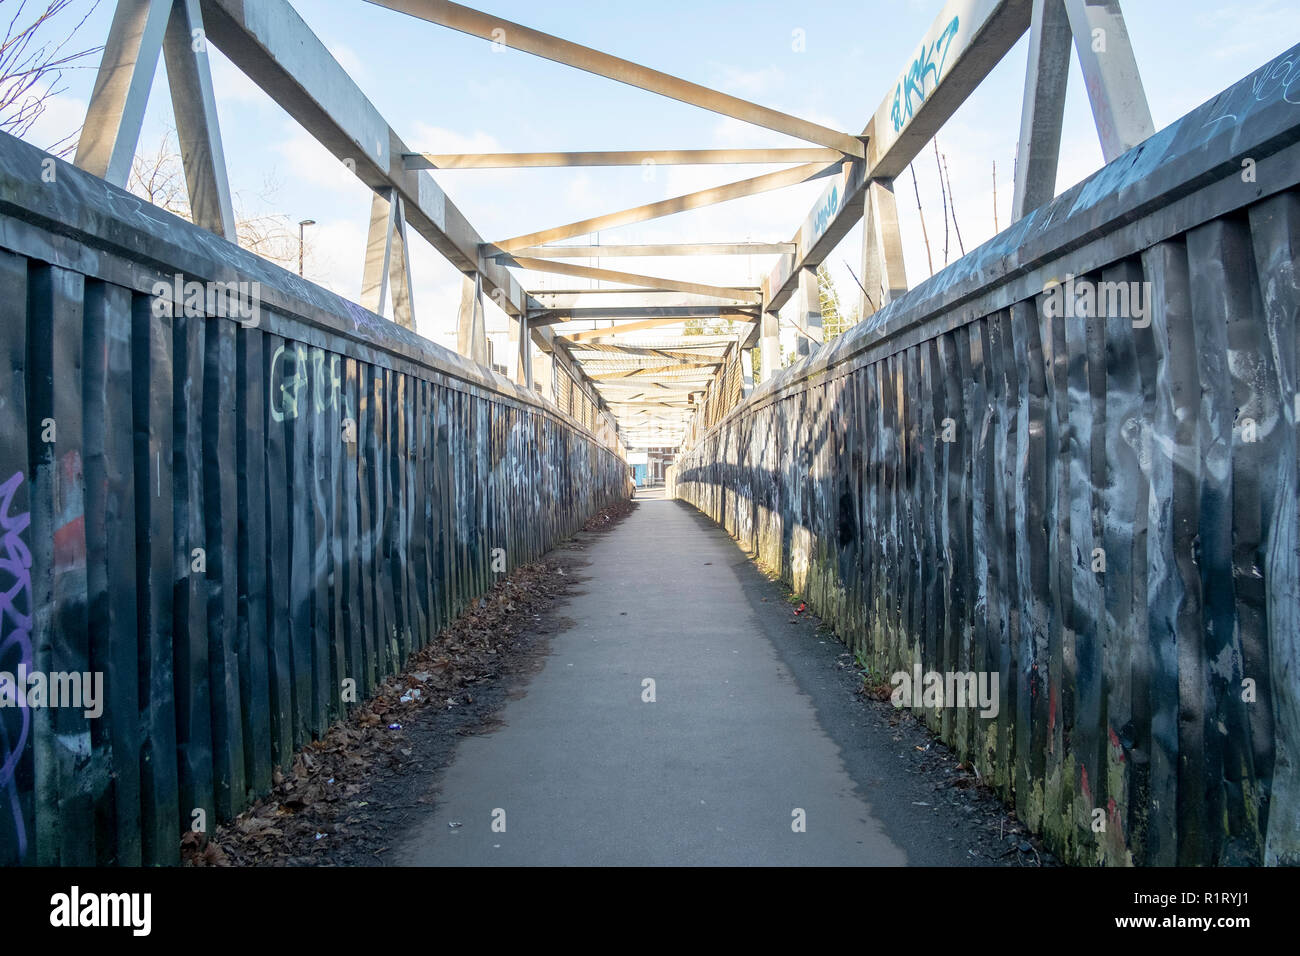 https://c8.alamy.com/comp/R1RYJ1/railway-footbridge-in-heaton-newcastle-upon-tyne-with-urban-decay-and-graffiti-R1RYJ1.jpg